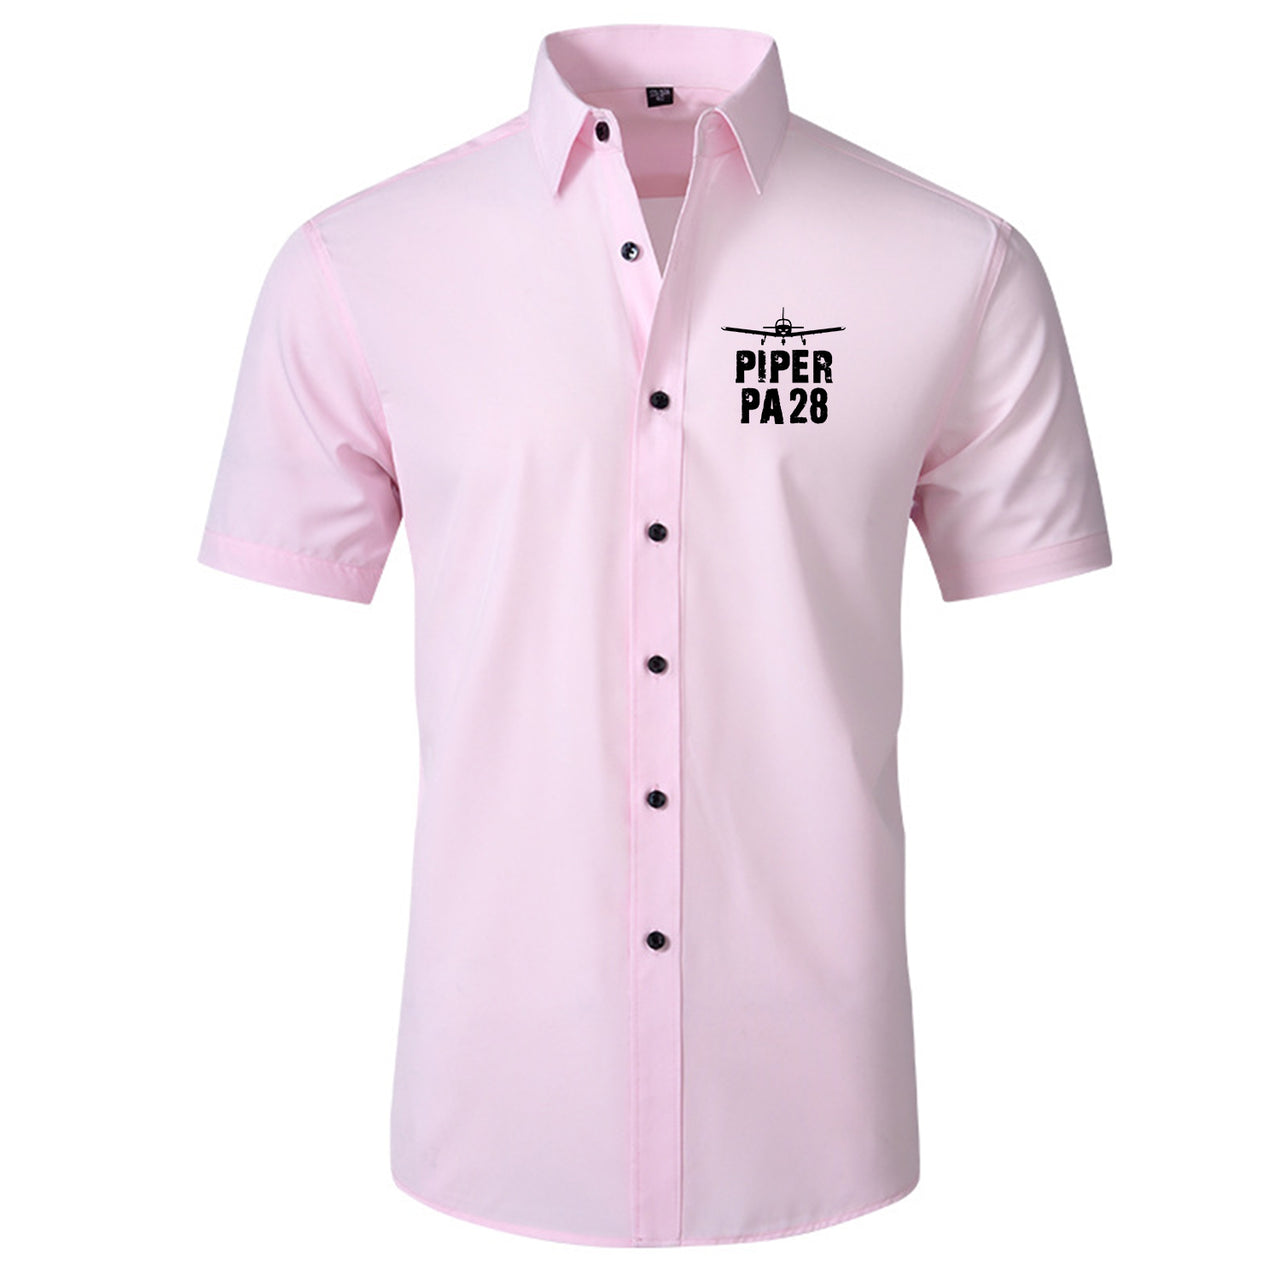 Piper PA28 & Plane Designed Short Sleeve Shirts